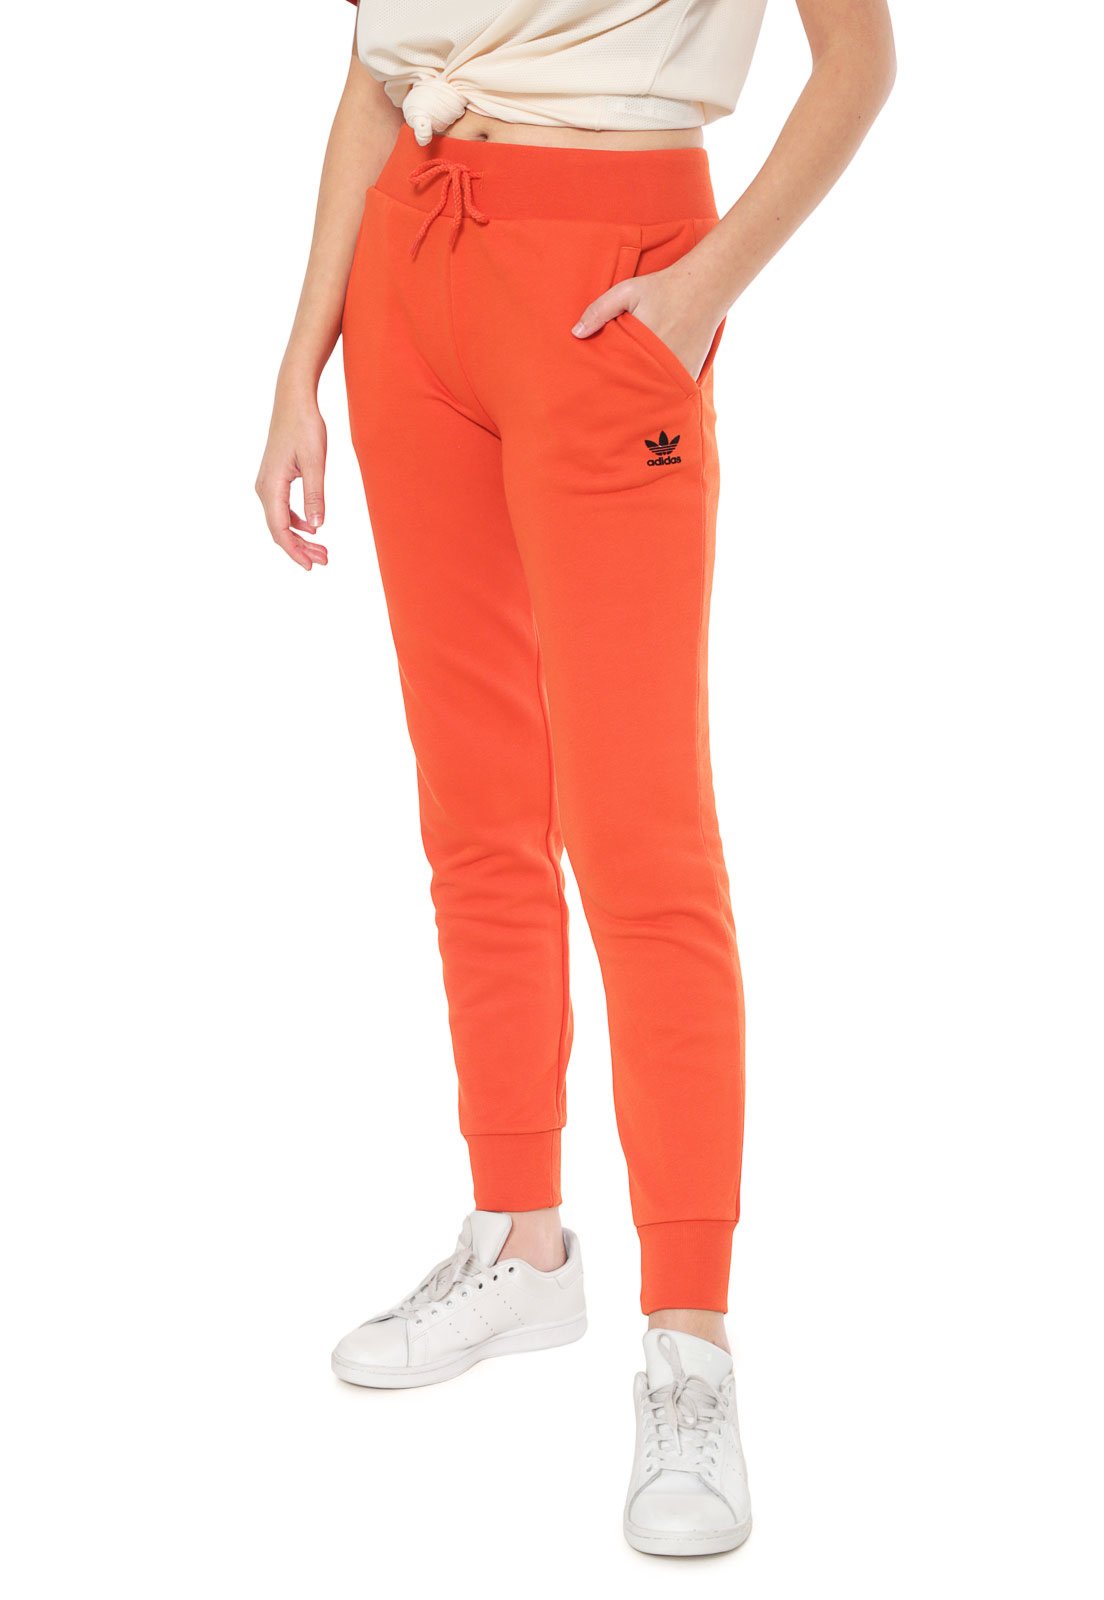 calça adidas laranja feminina